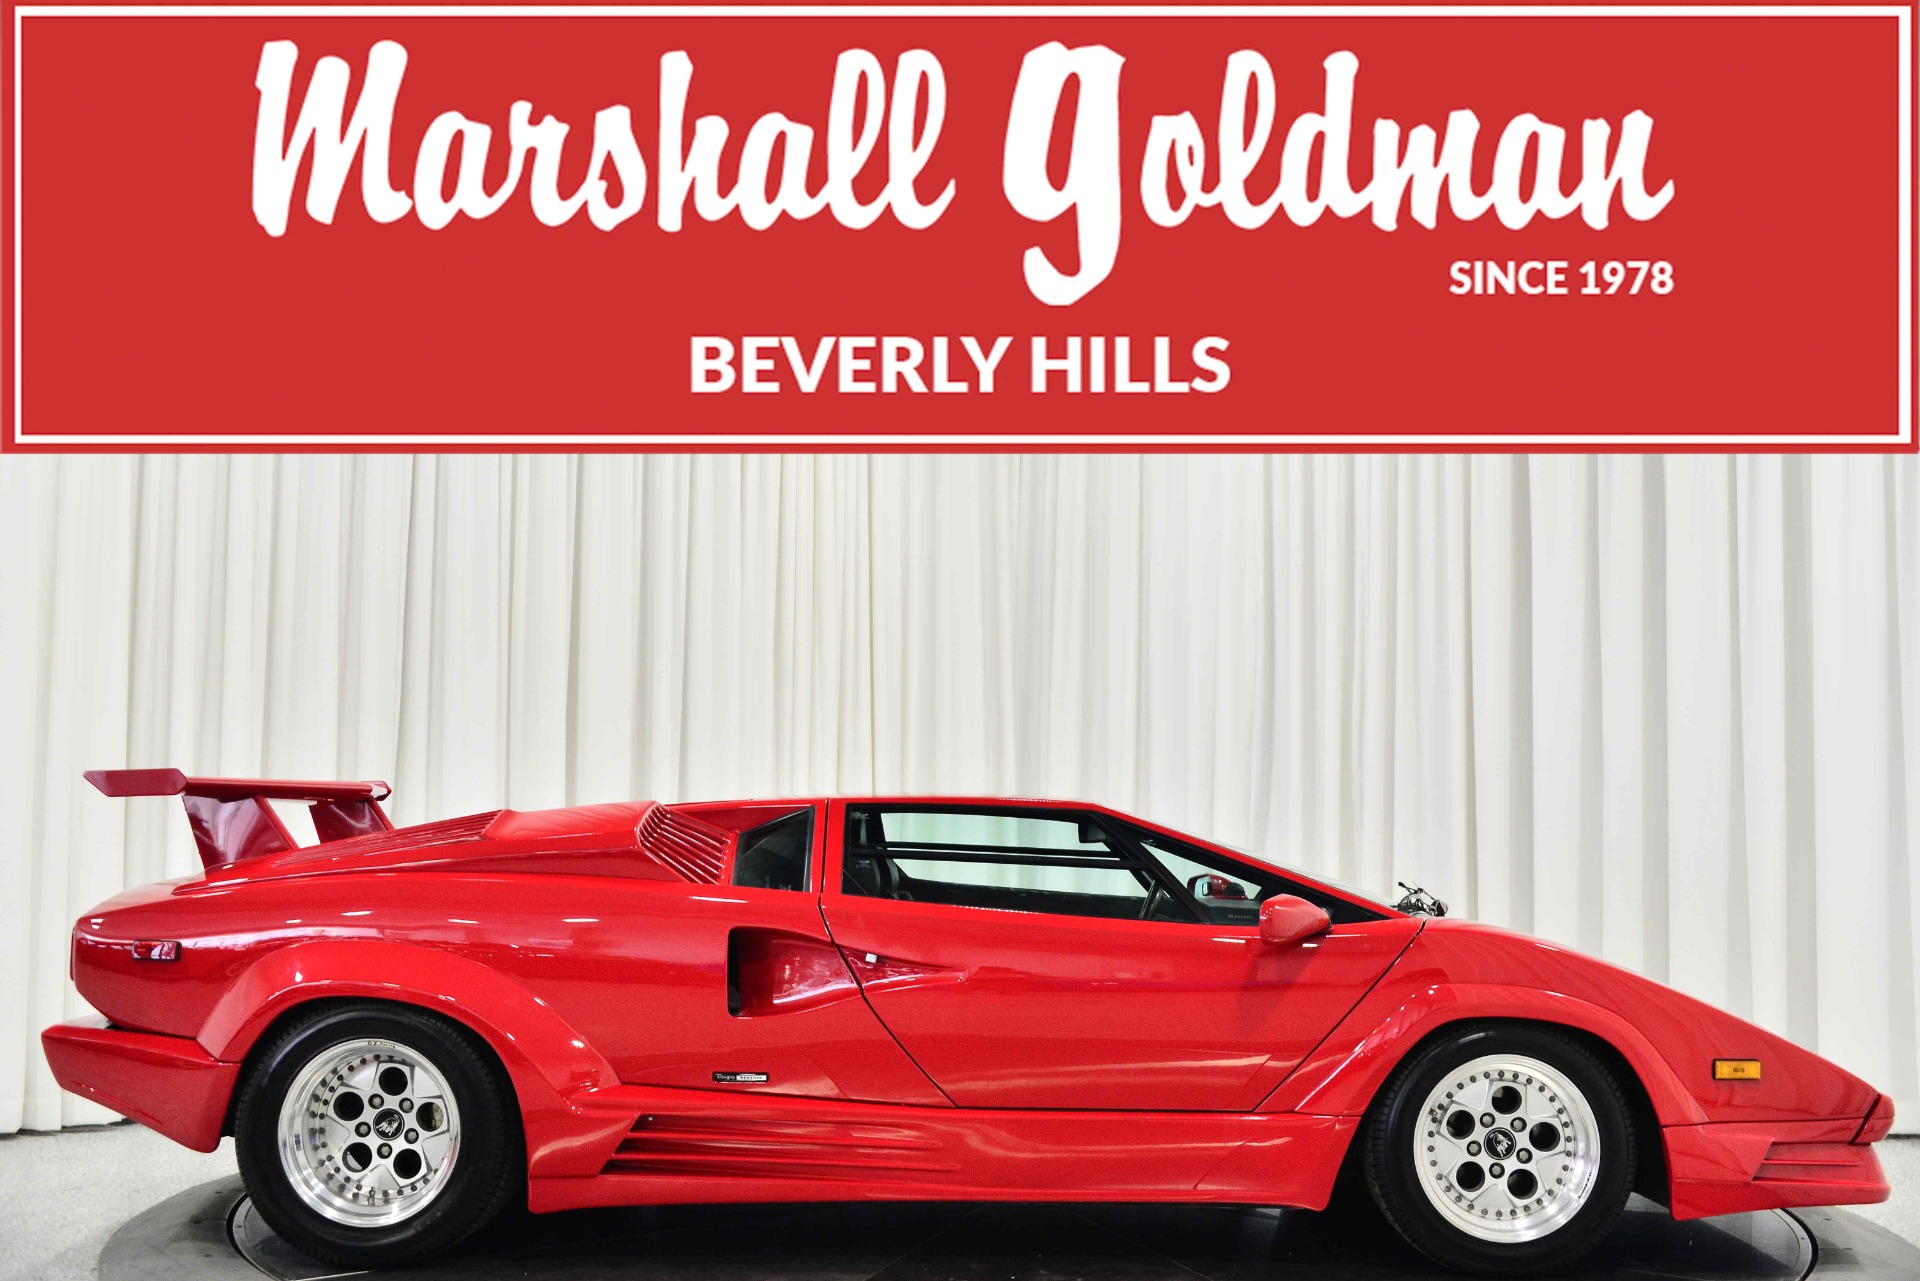 Used 1989 Lamborghini Countach 25th Anniversary For Sale ($638,900) |  Marshall Goldman Beverly Hills Stock #B23892